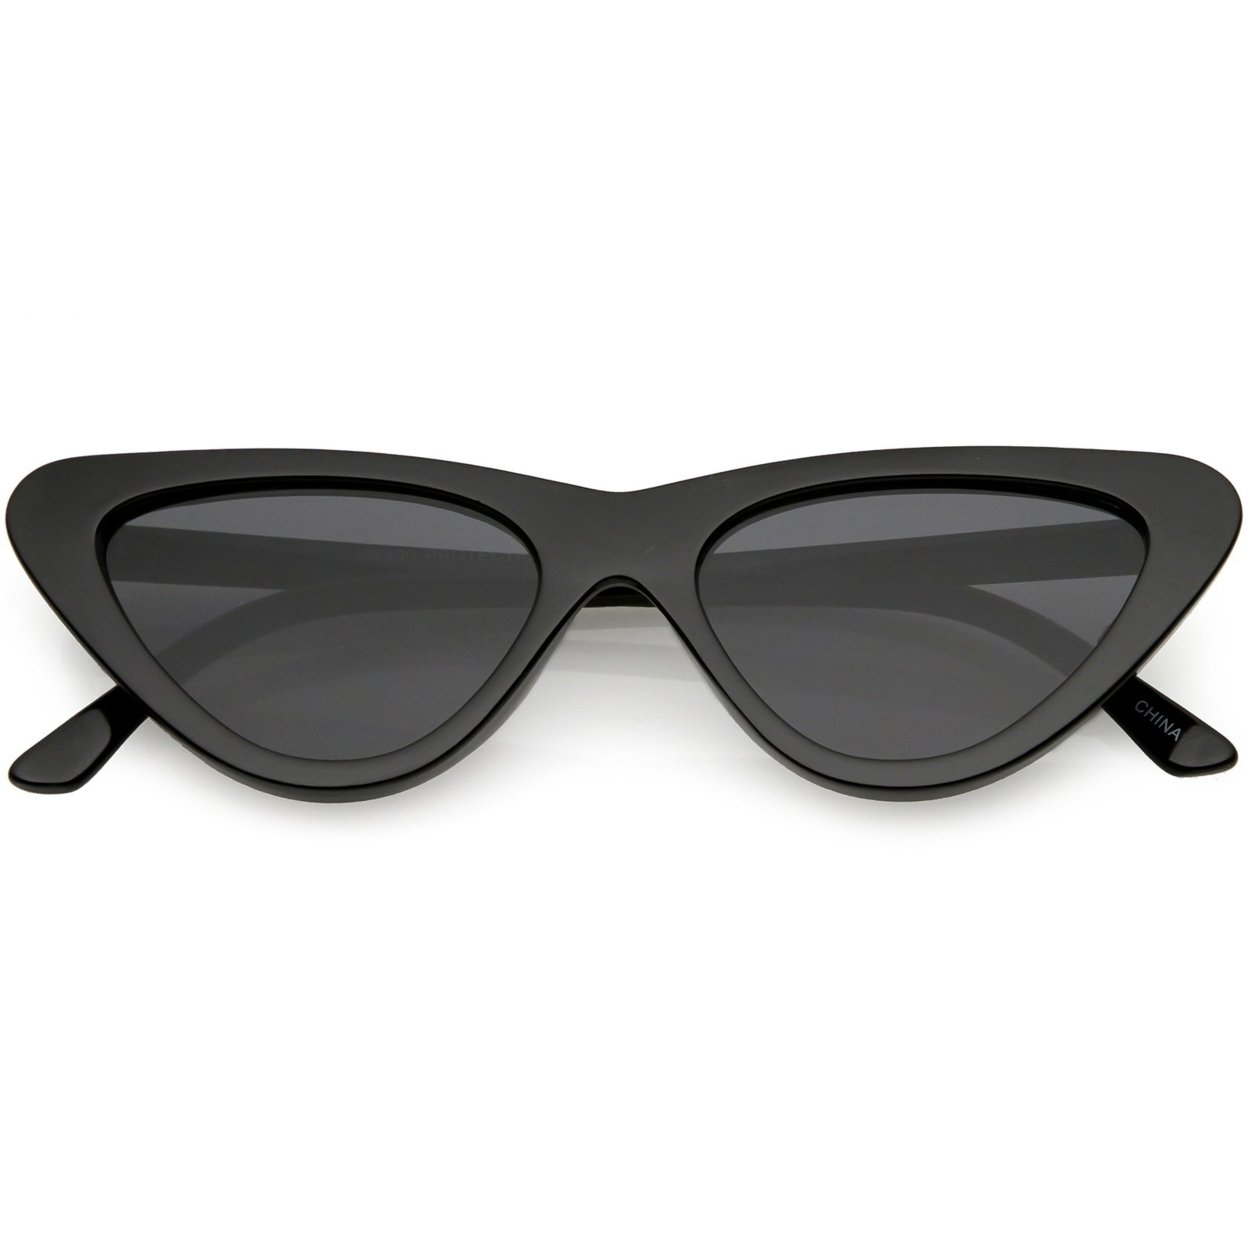 Women's Small Thick Cat Eye Sunglasses Neutral Colored Flat Lens 51mm - Black / Smoke